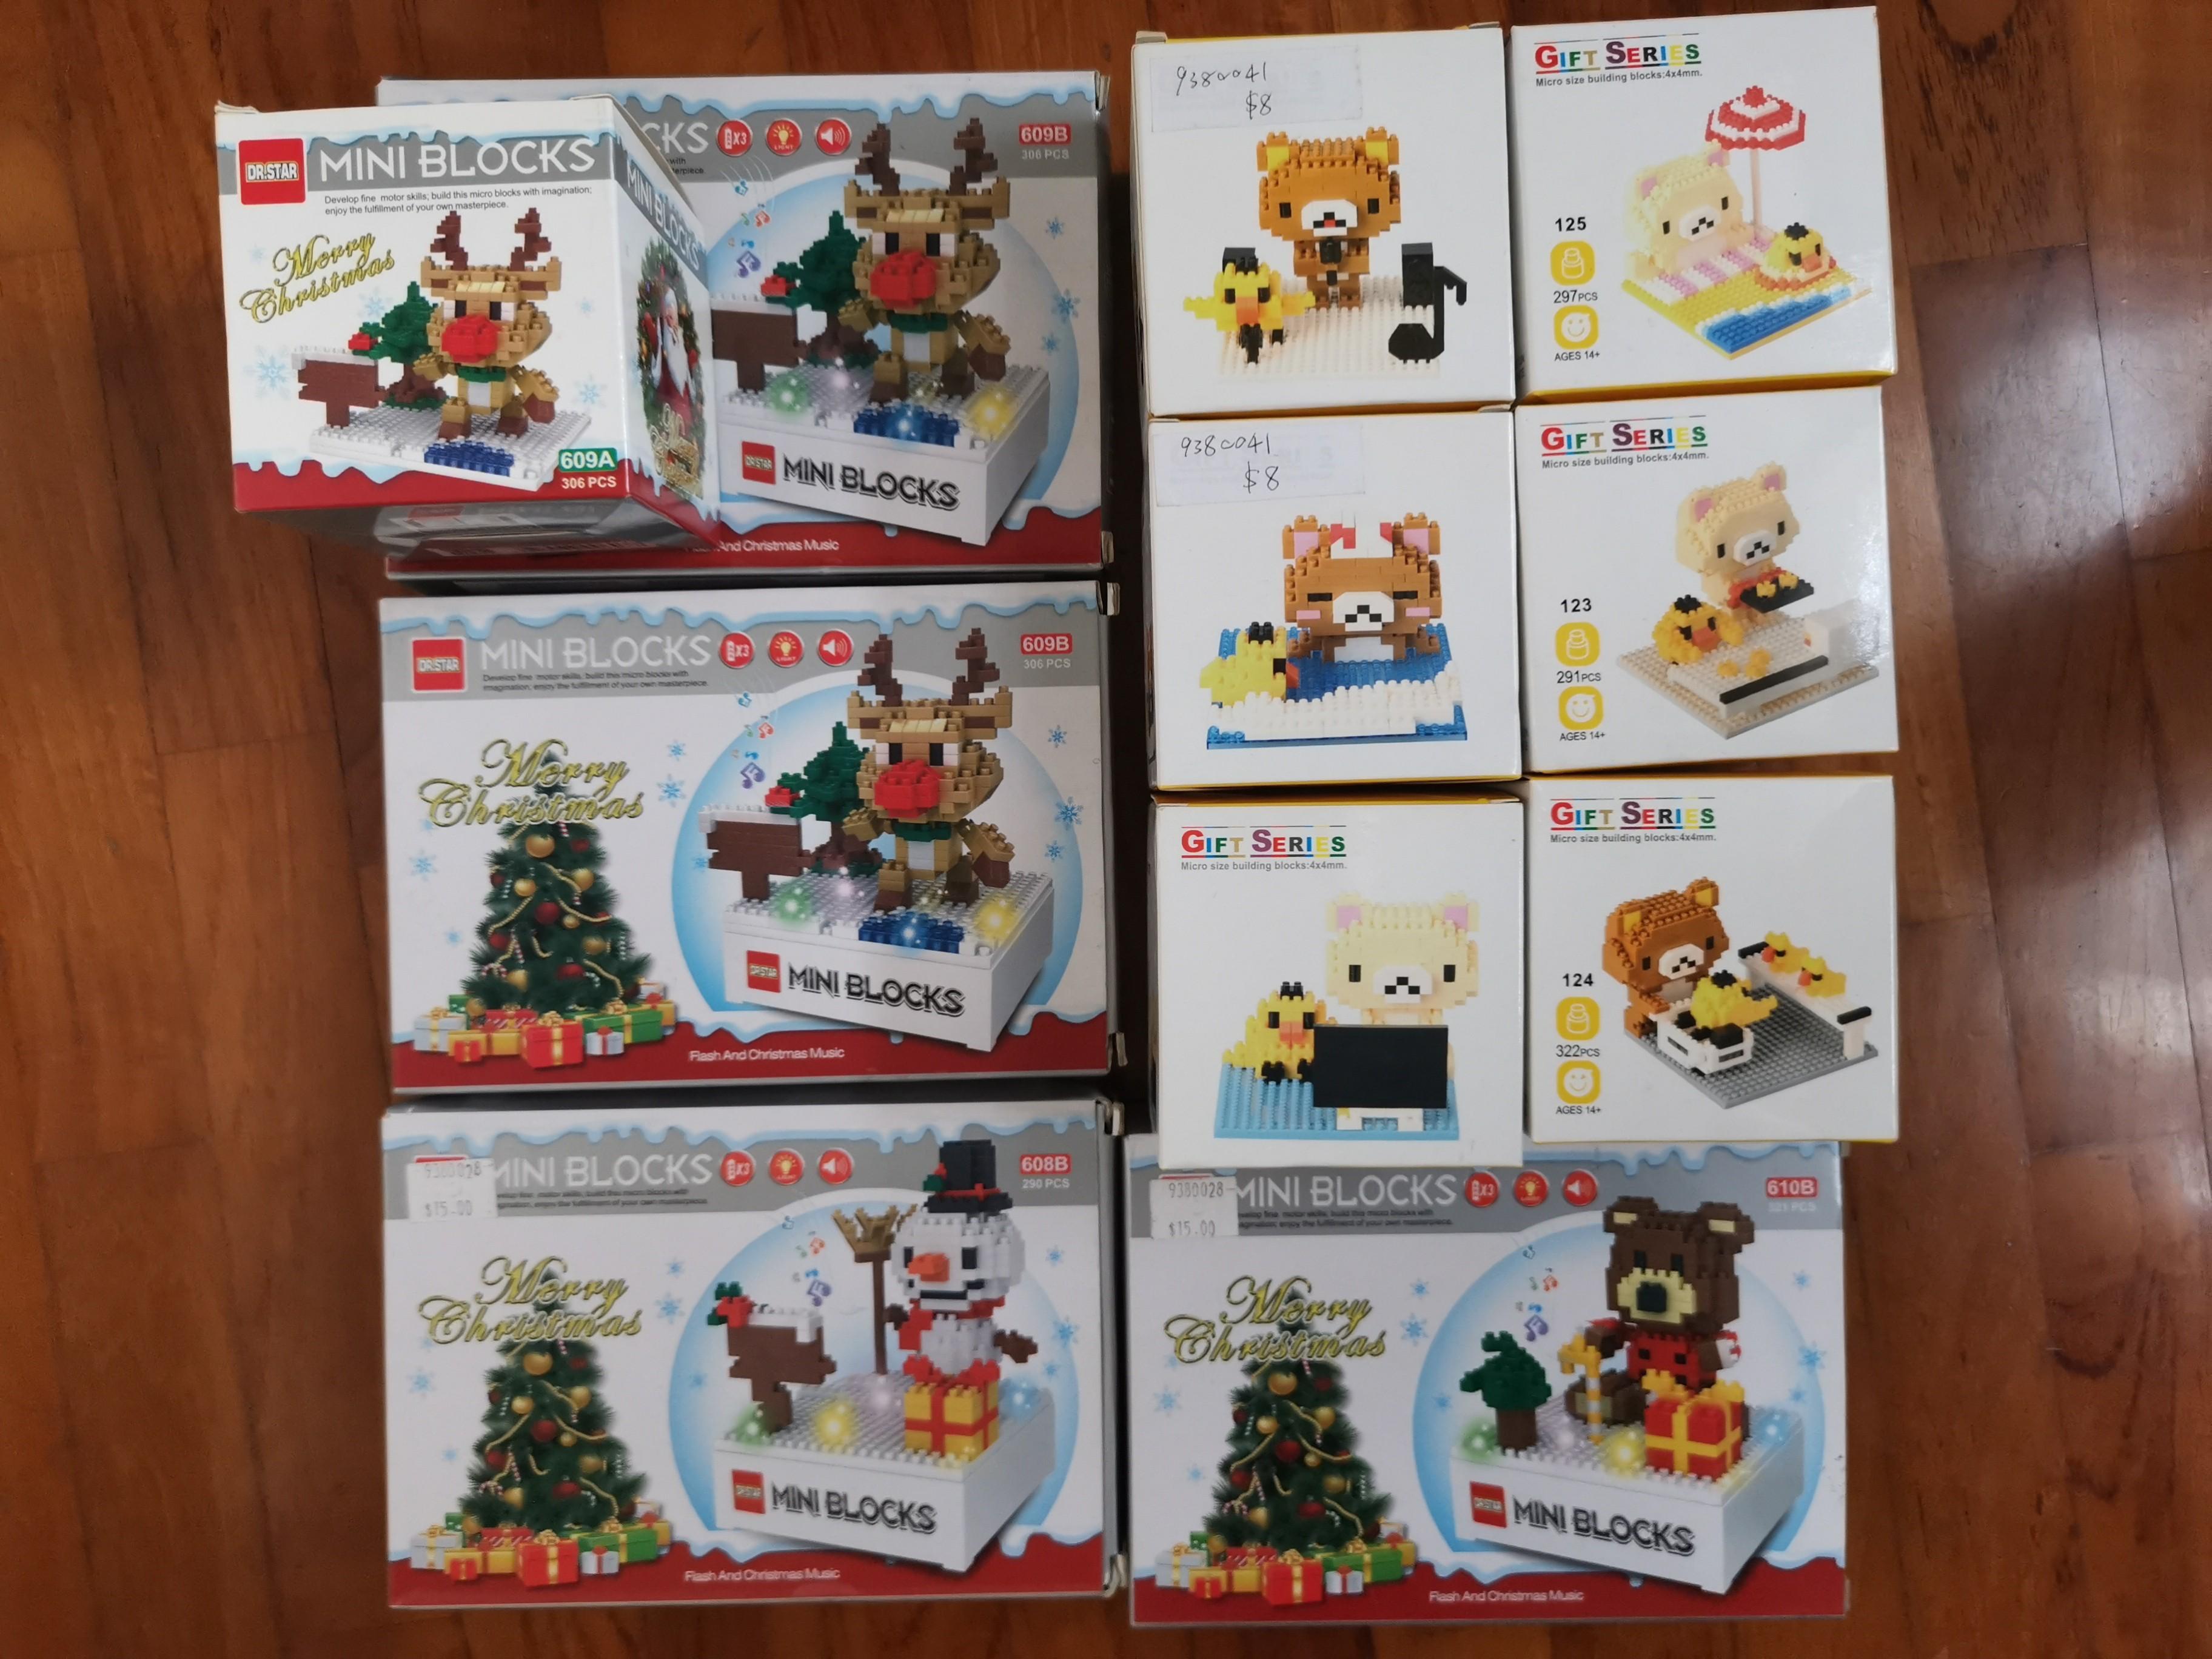 Mini Blocks Christmas Snowman 290Pcs Blocks Building Set Puzzles